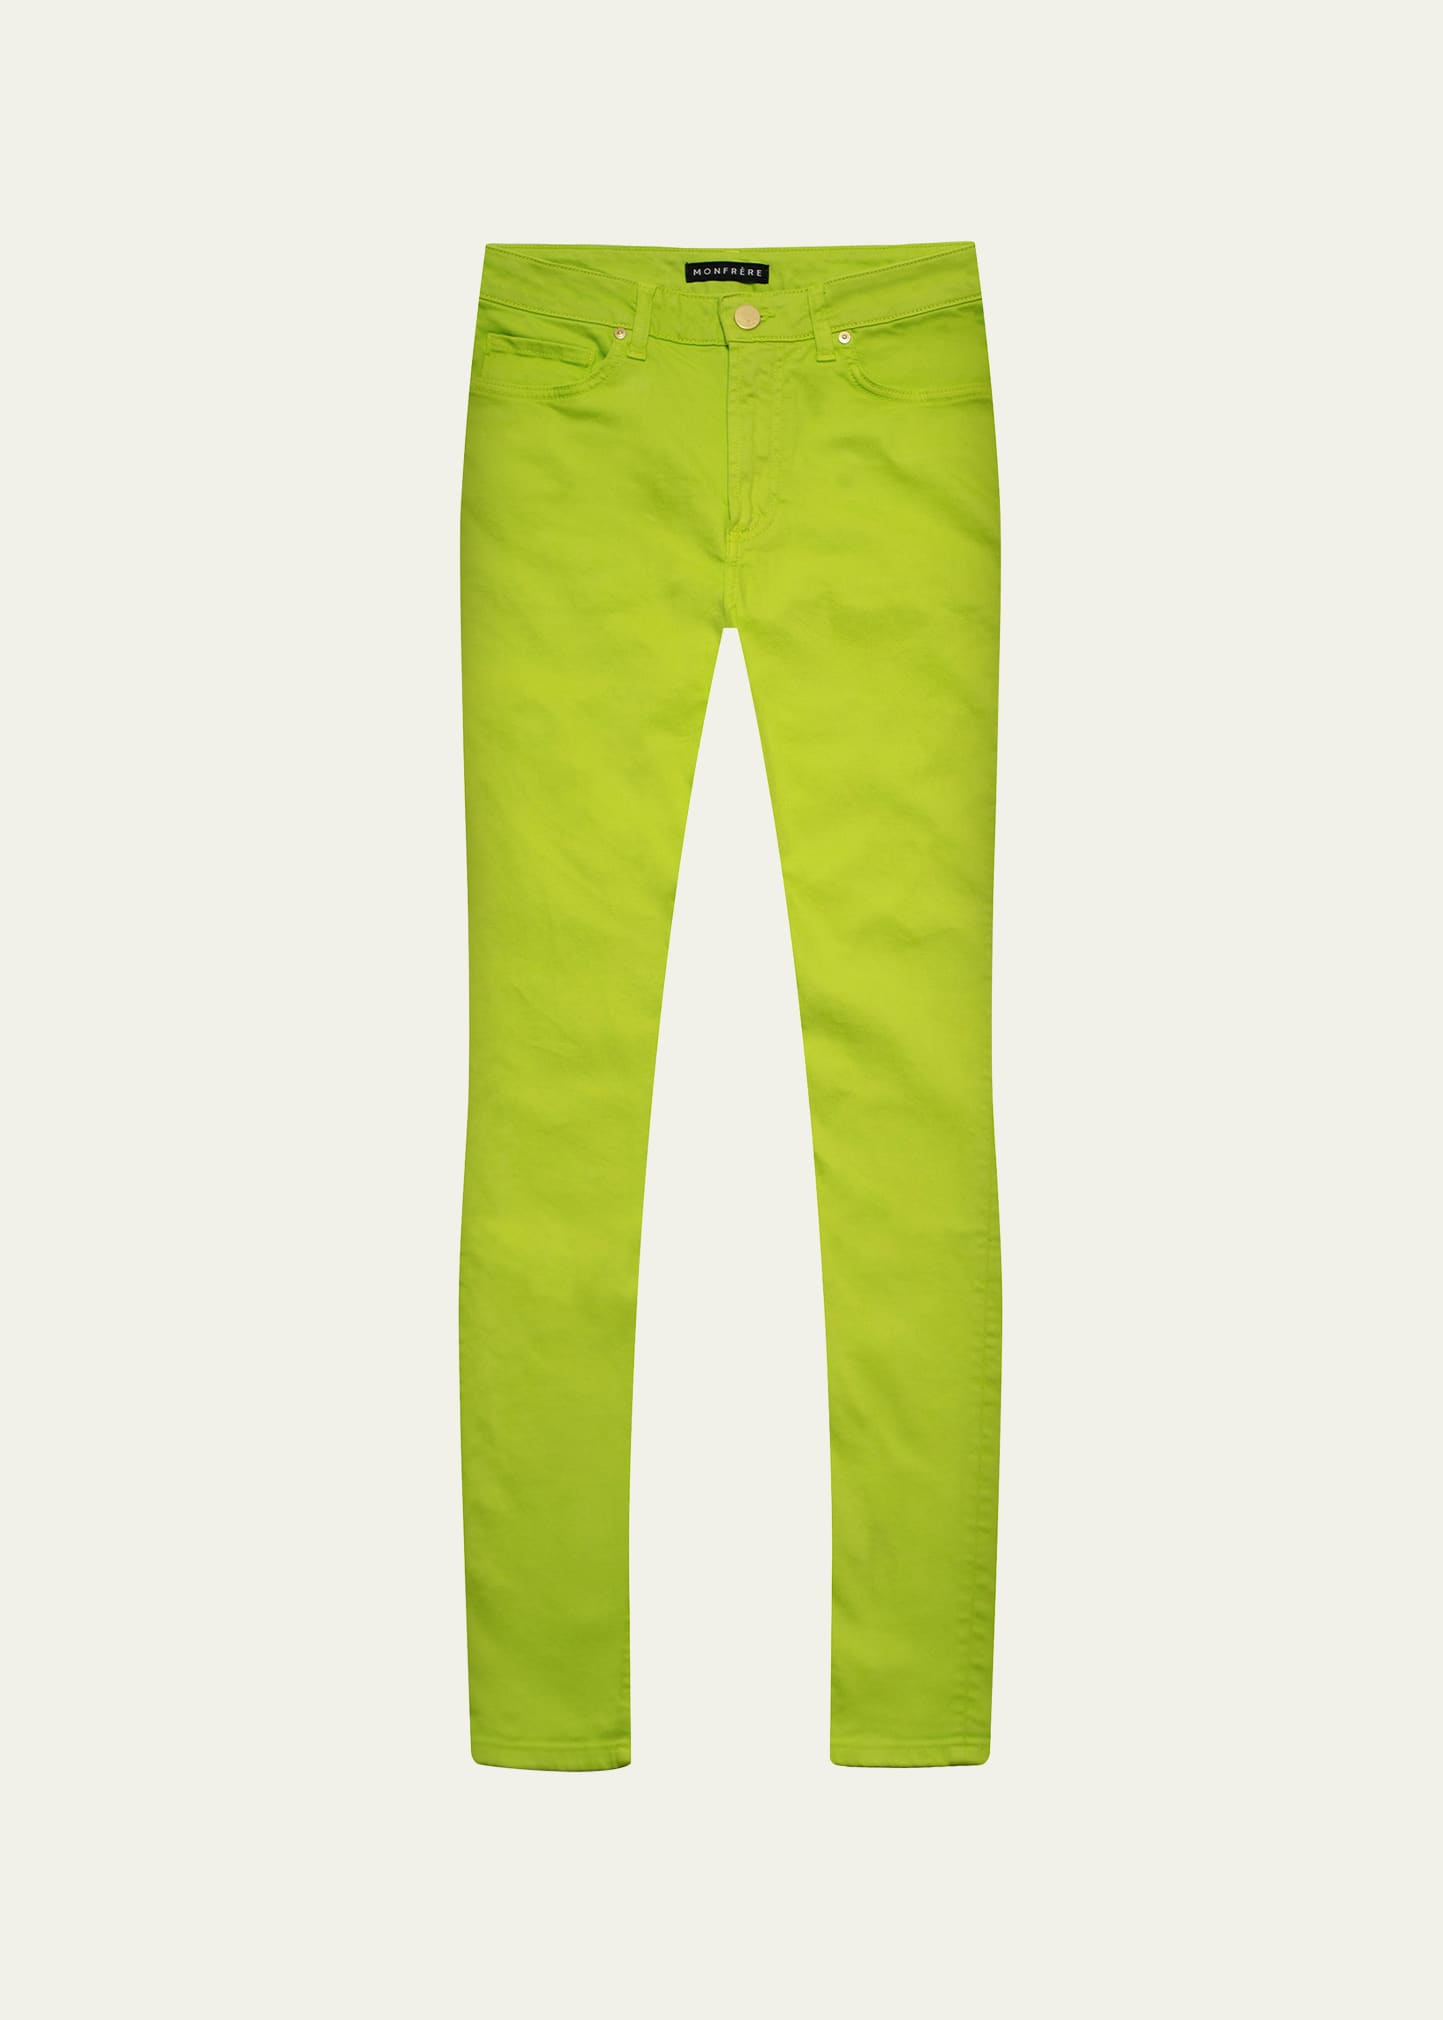 Monfrere Men's Greyson Skinny Jeans In Neon Green